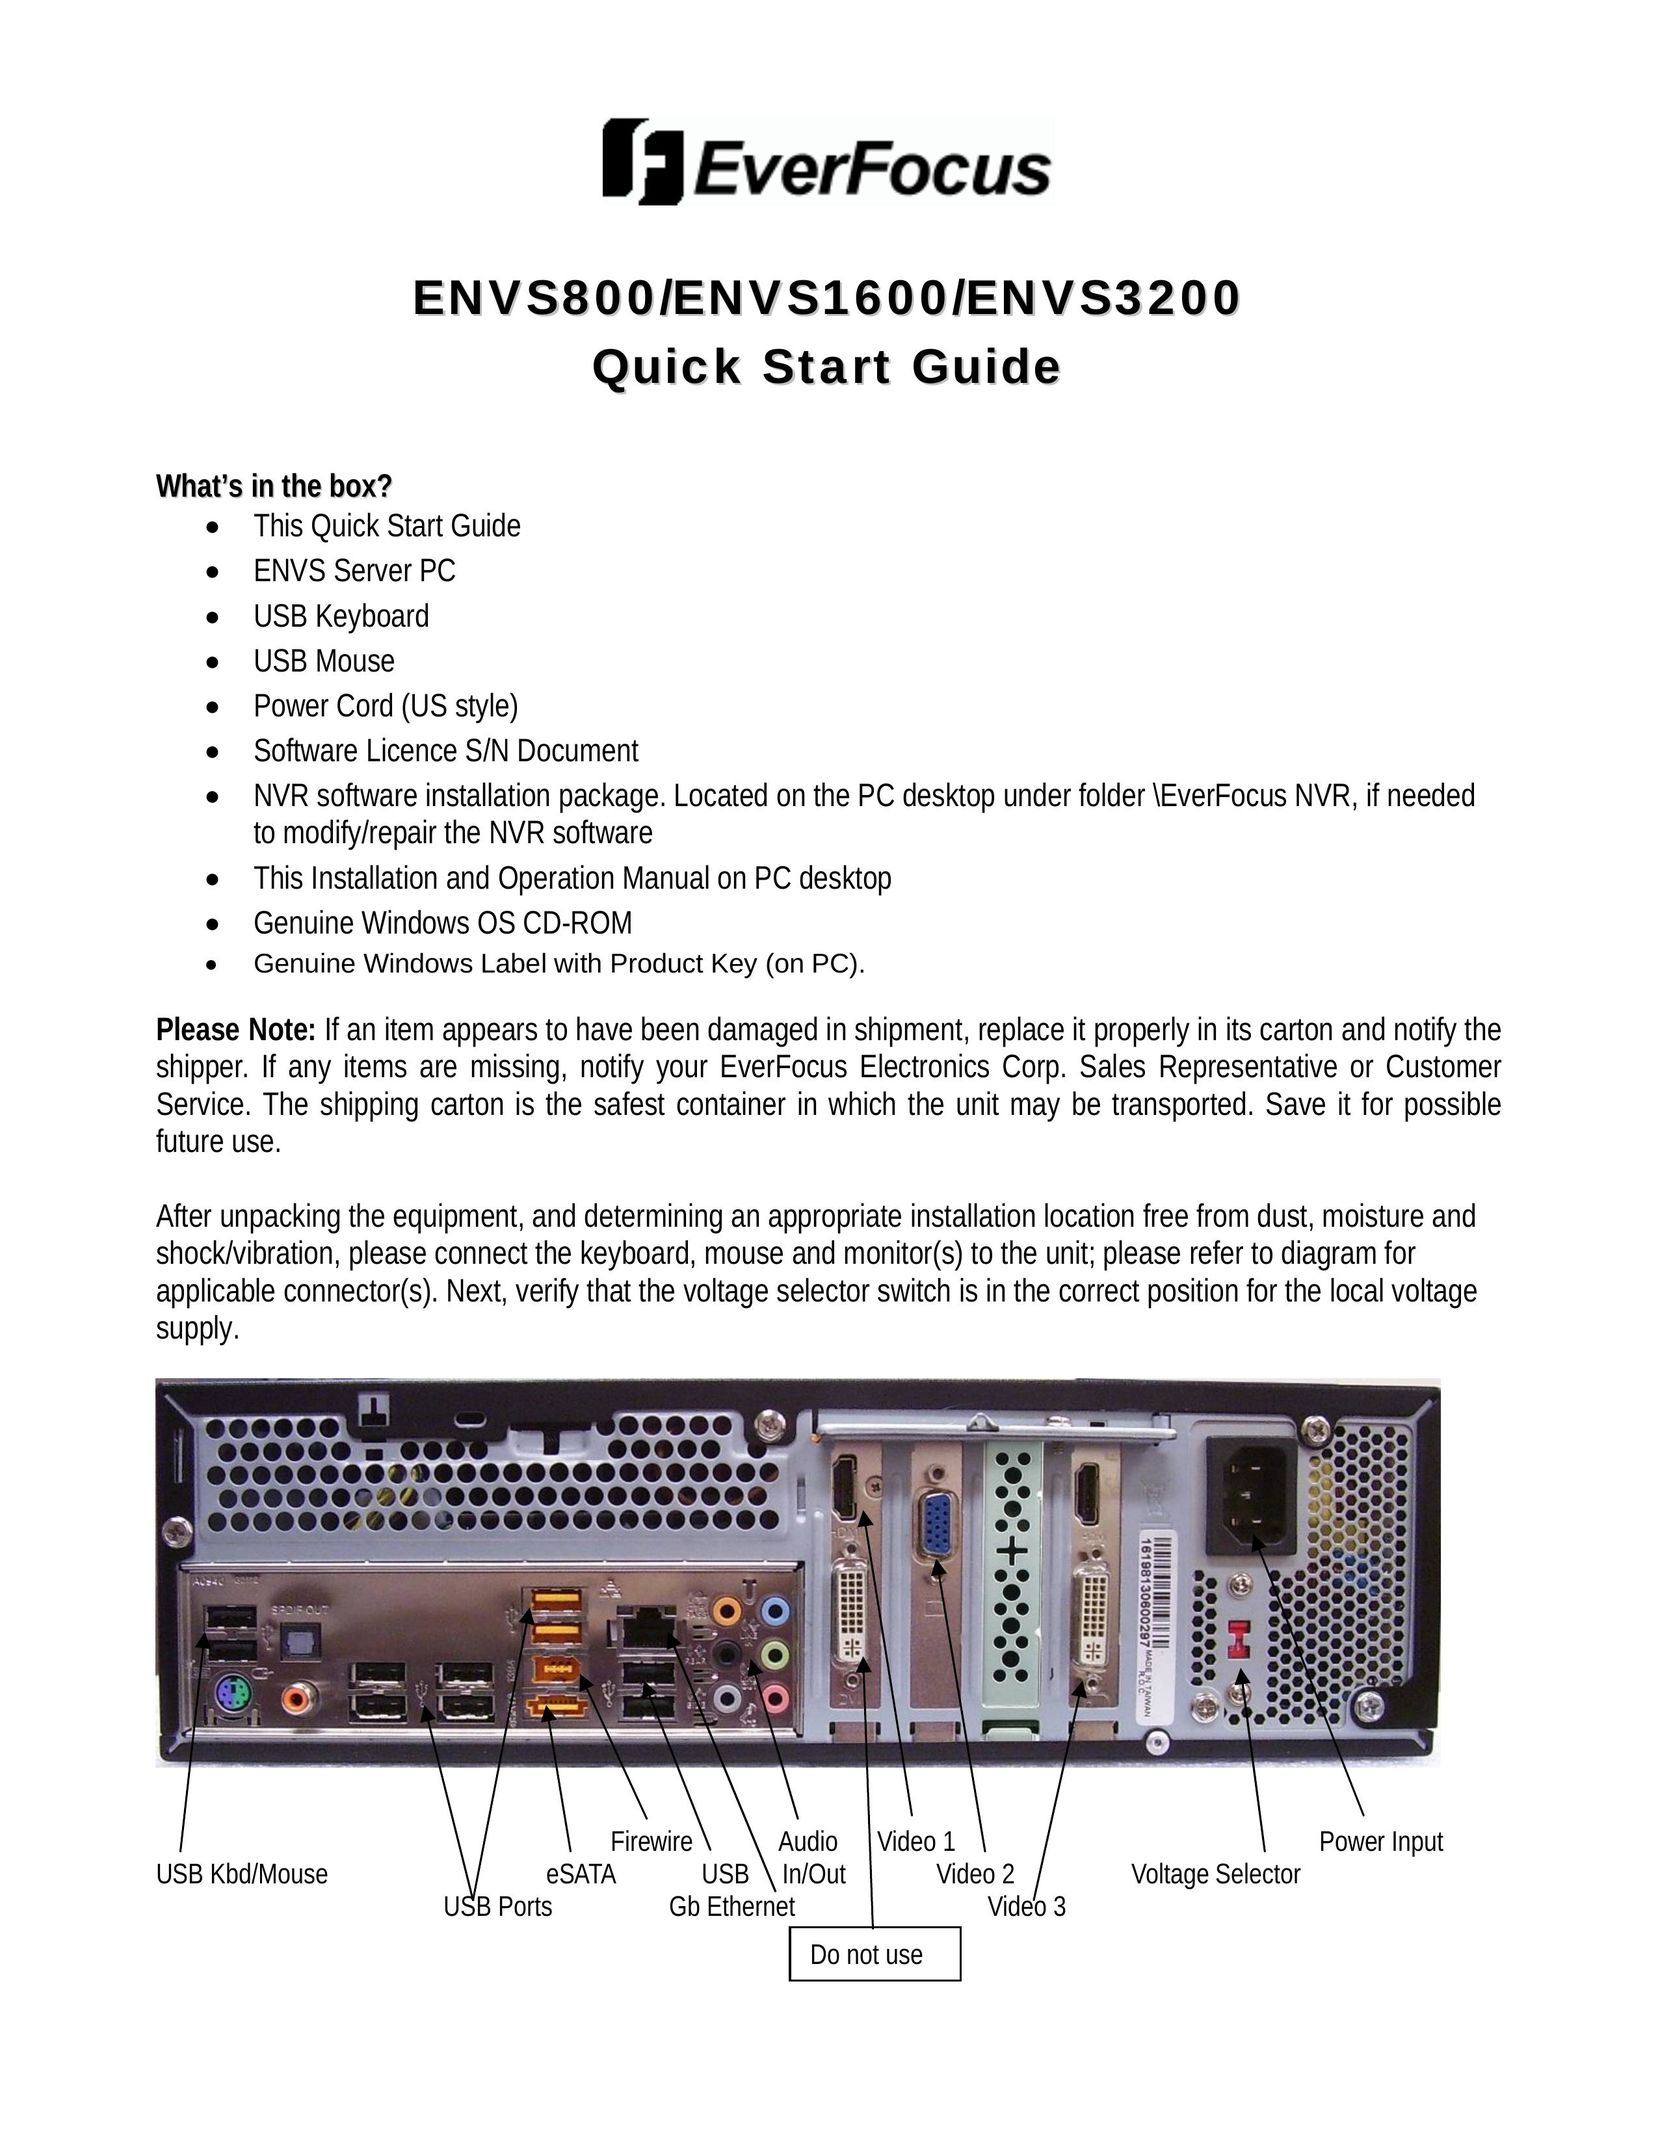 EverFocus ENVS3200 Computer Hardware User Manual